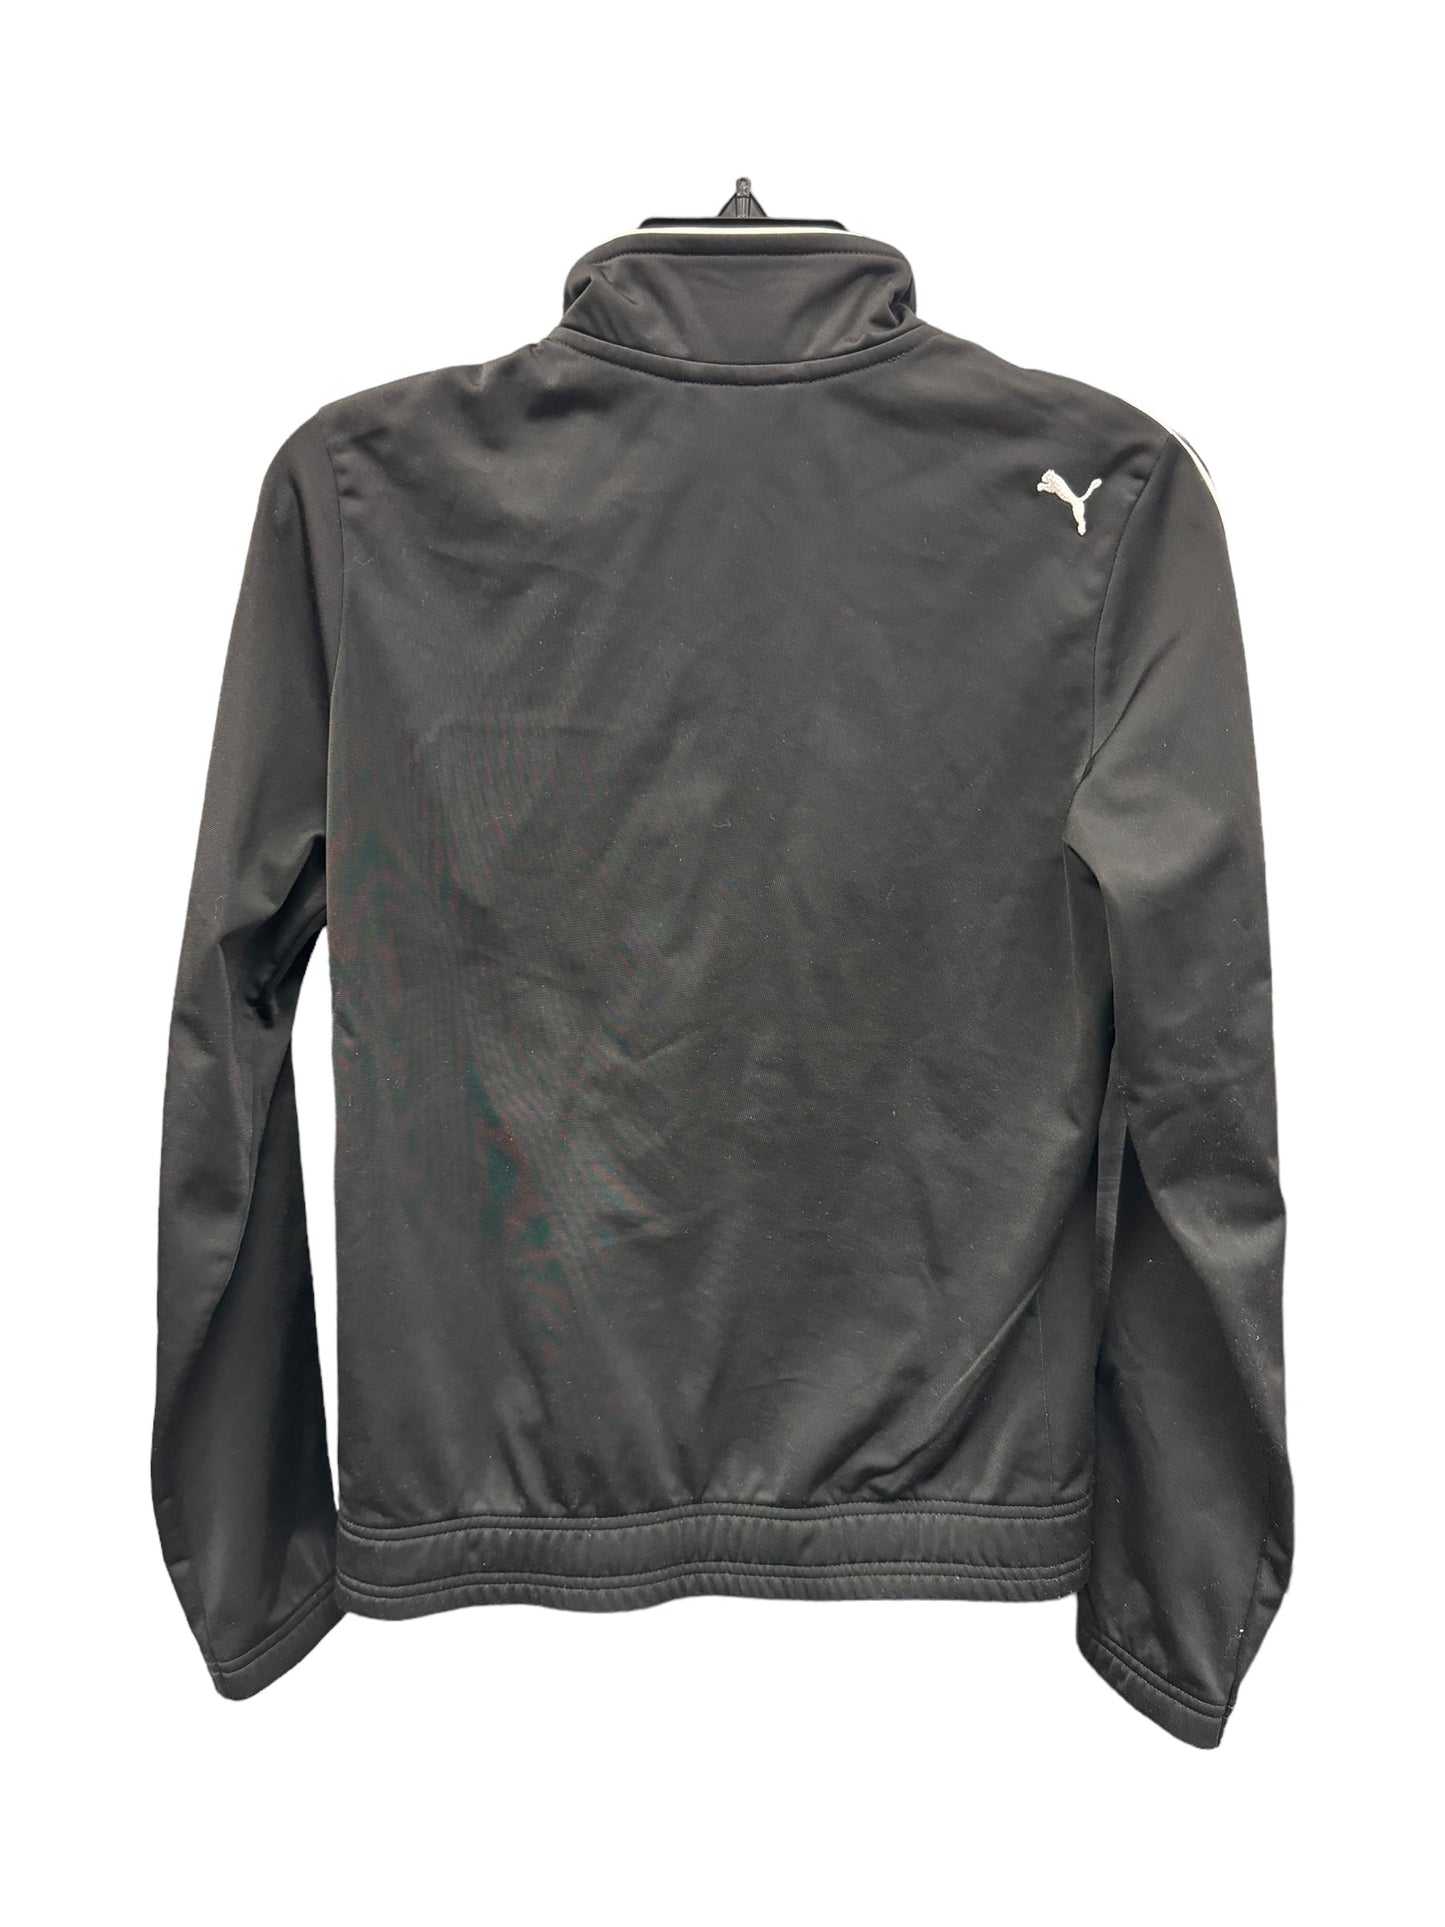 Athletic Jacket By Puma  Size: M